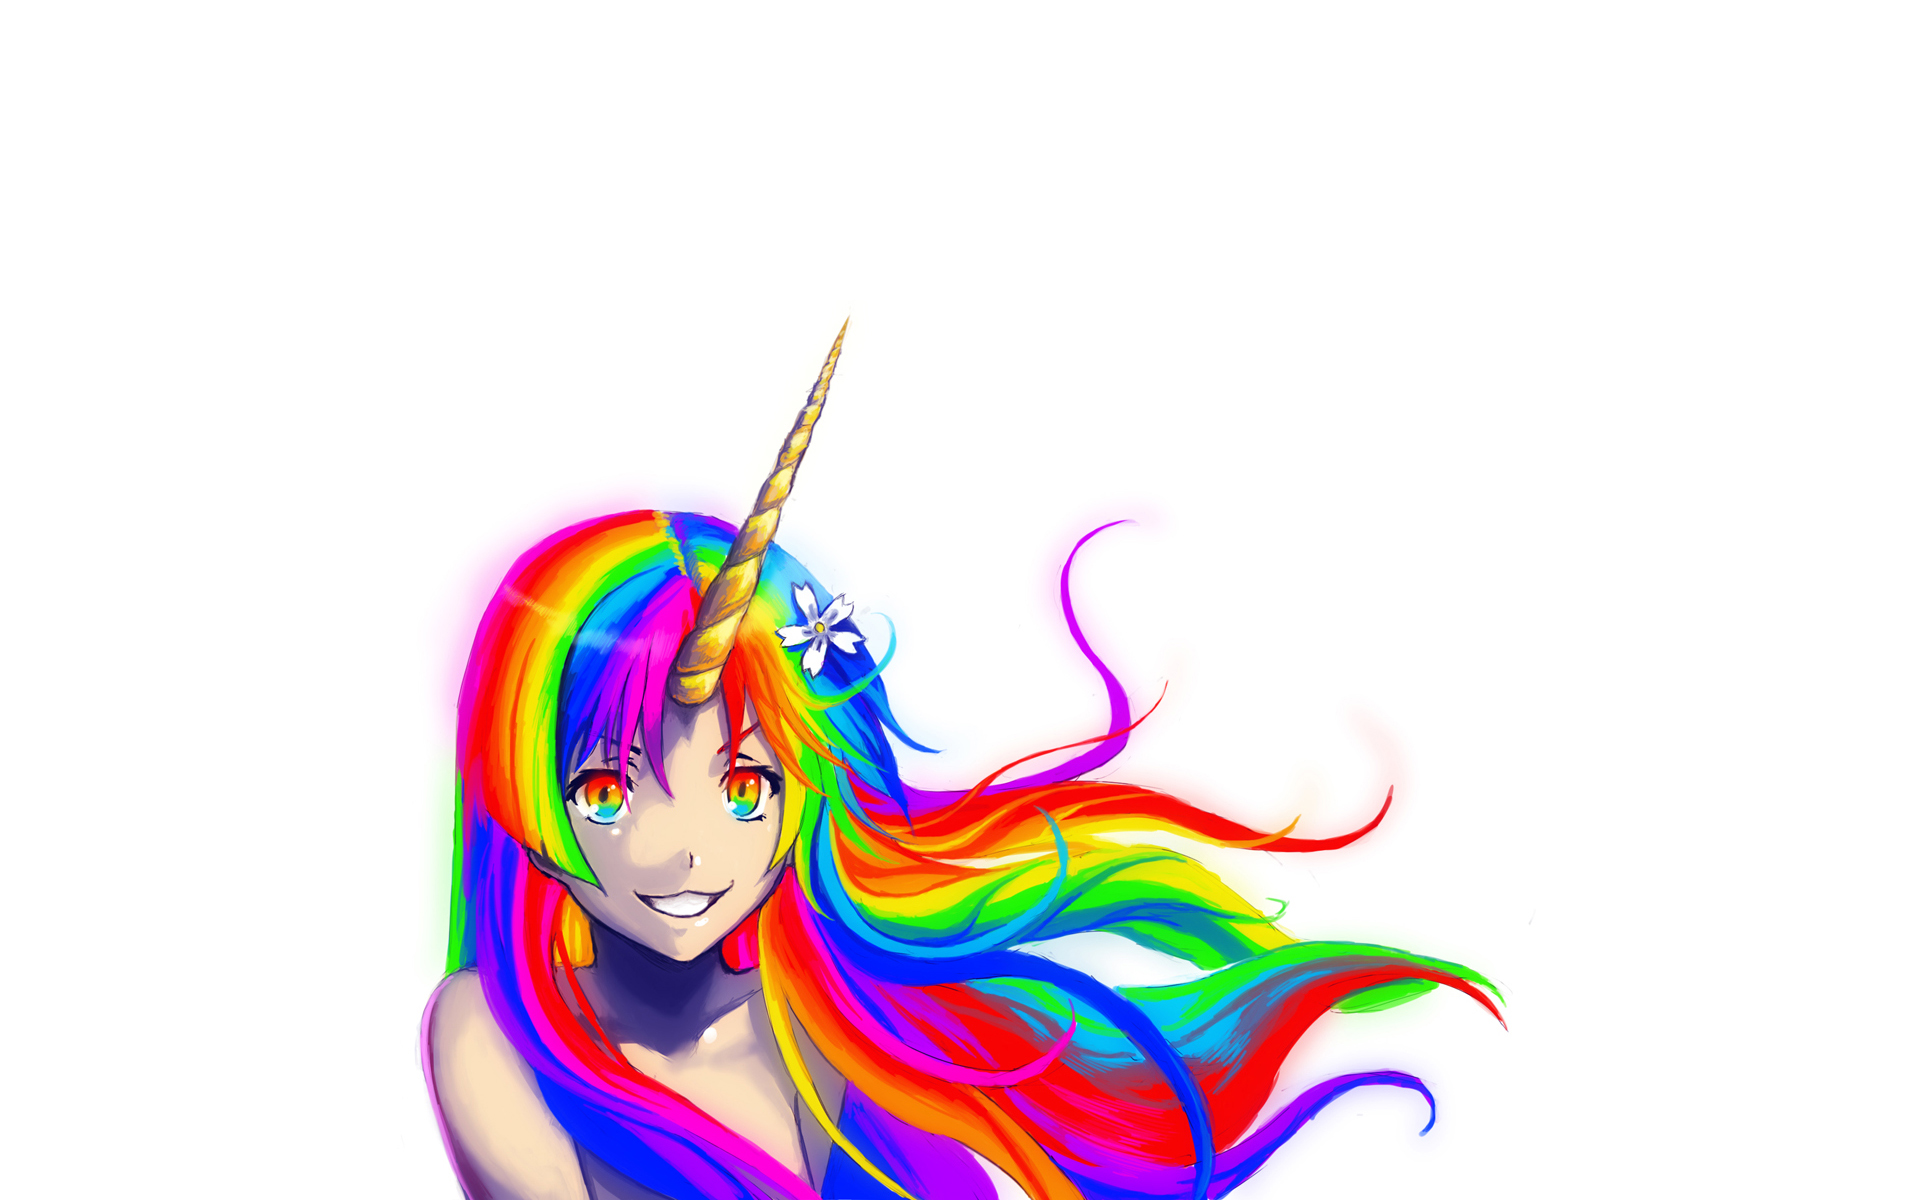  49 Unicorn  Rainbow  Wallpapers  on WallpaperSafari